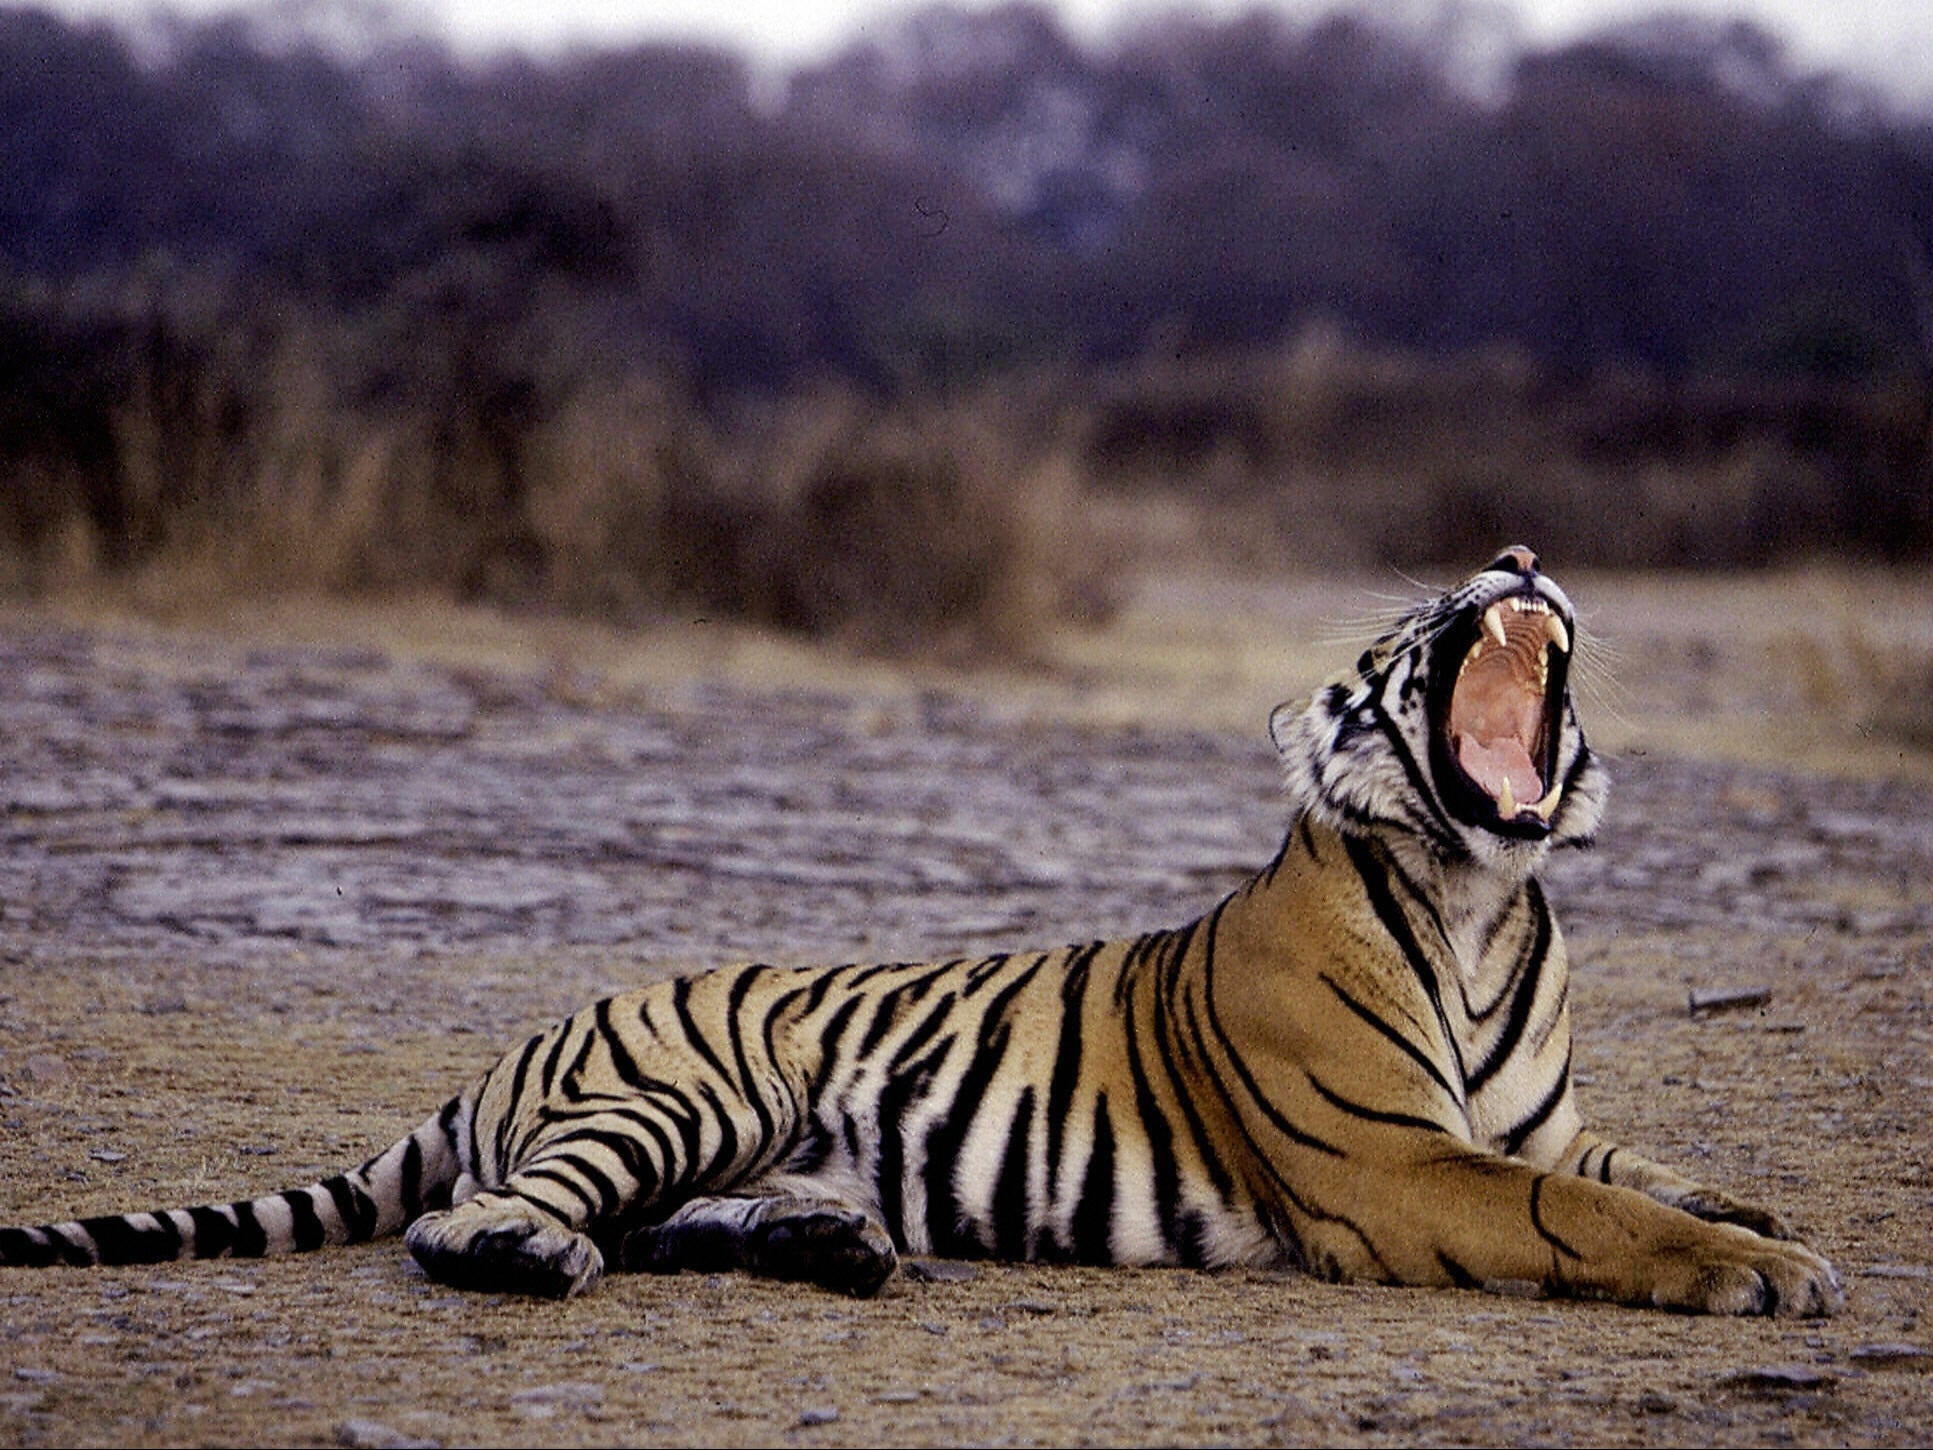 A tiger yawns at Ranthambore National Park in January 2004